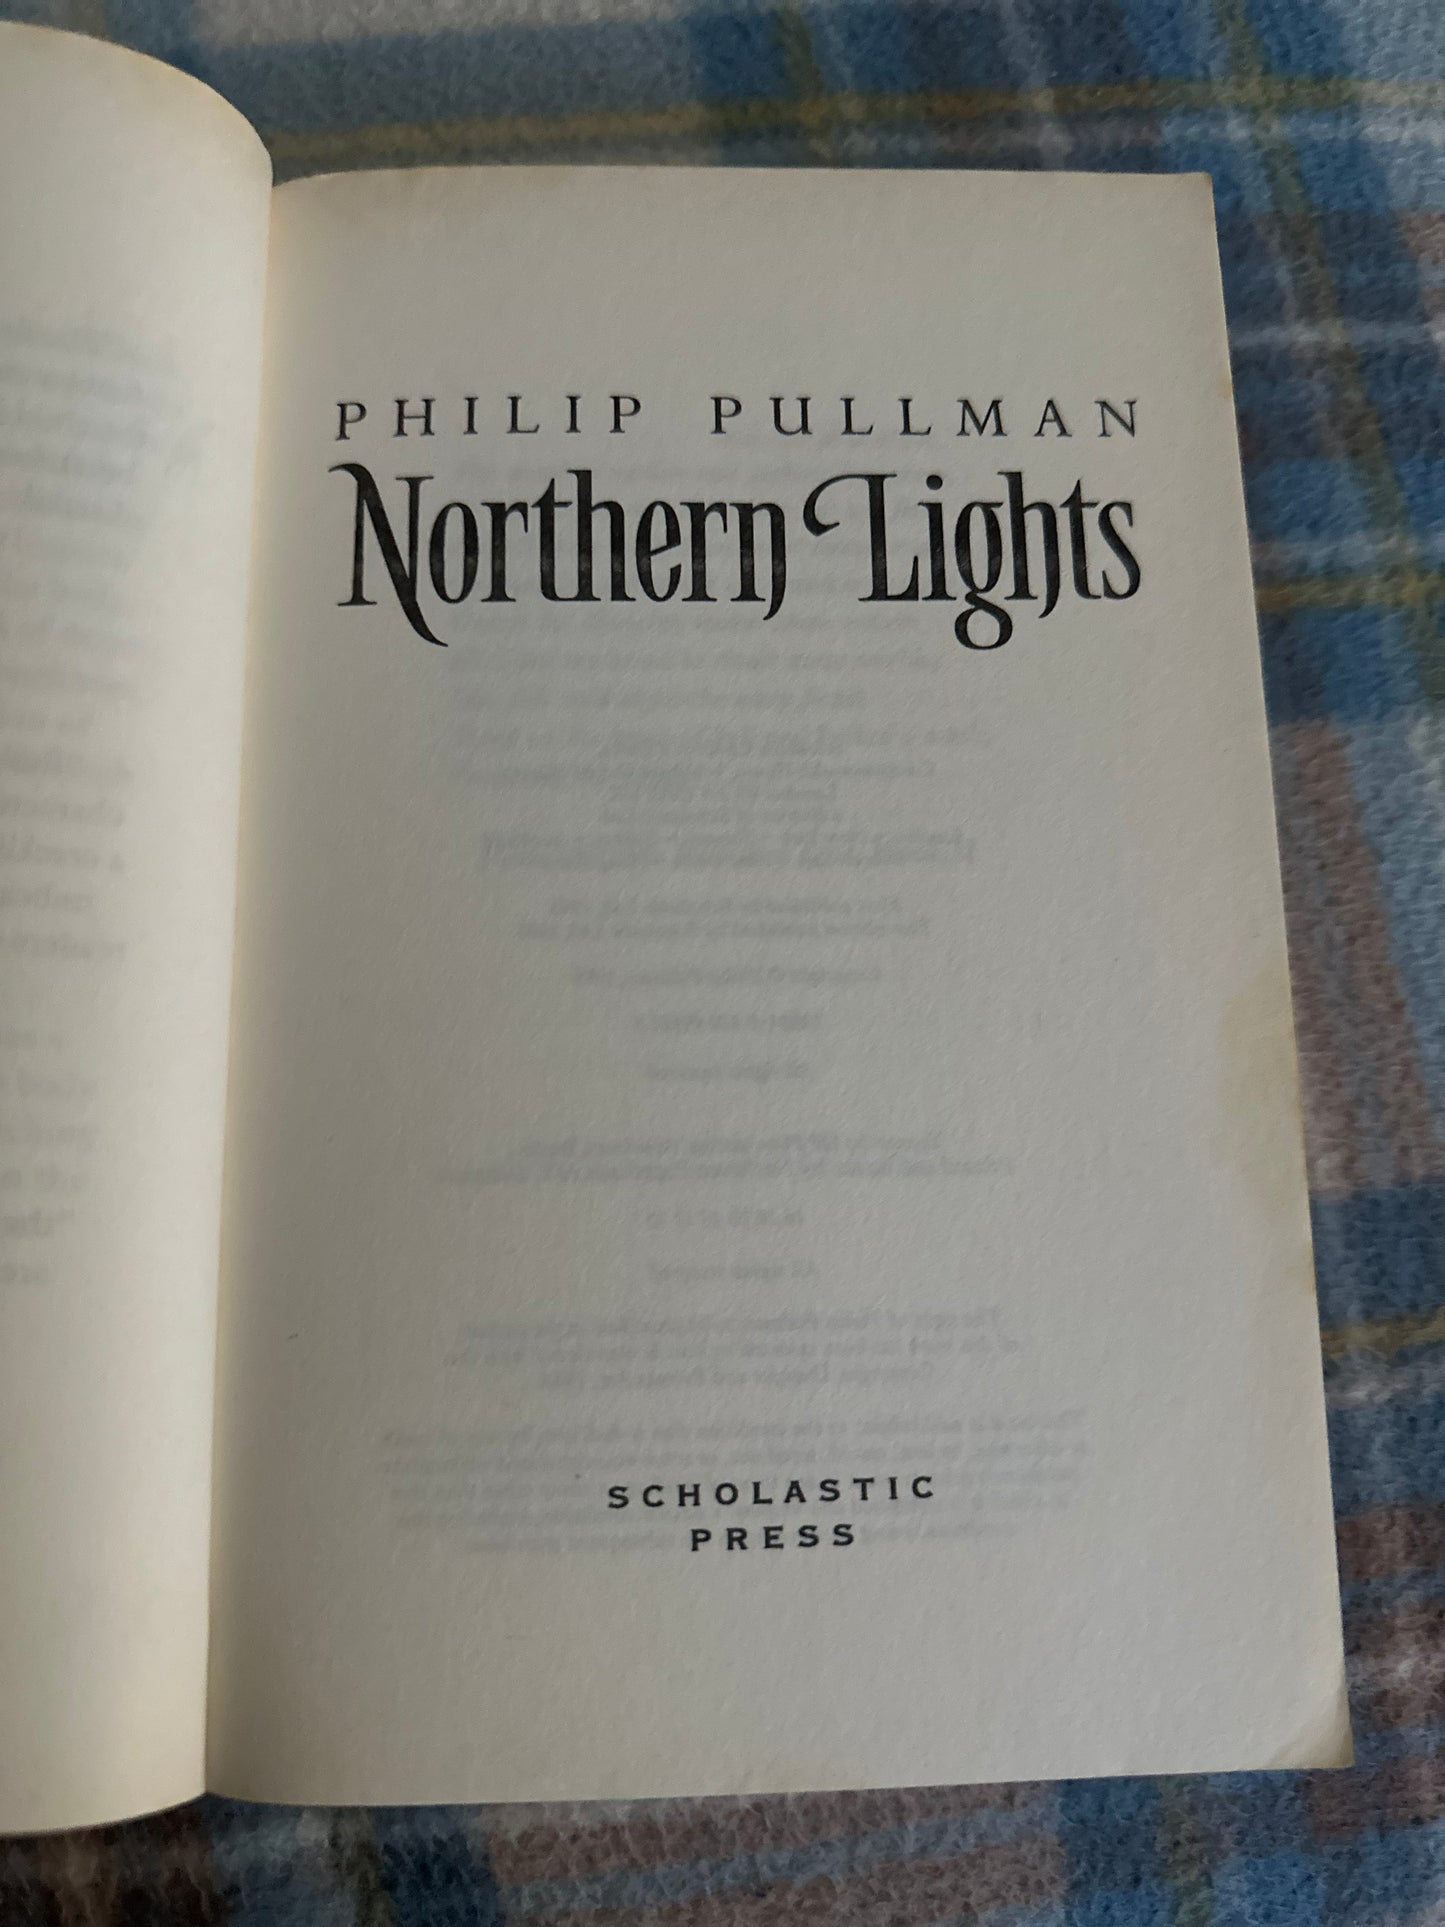 2001 Northern Lights(Part 1 His Dark Materials) Philip Pullman(Scholastic Press)